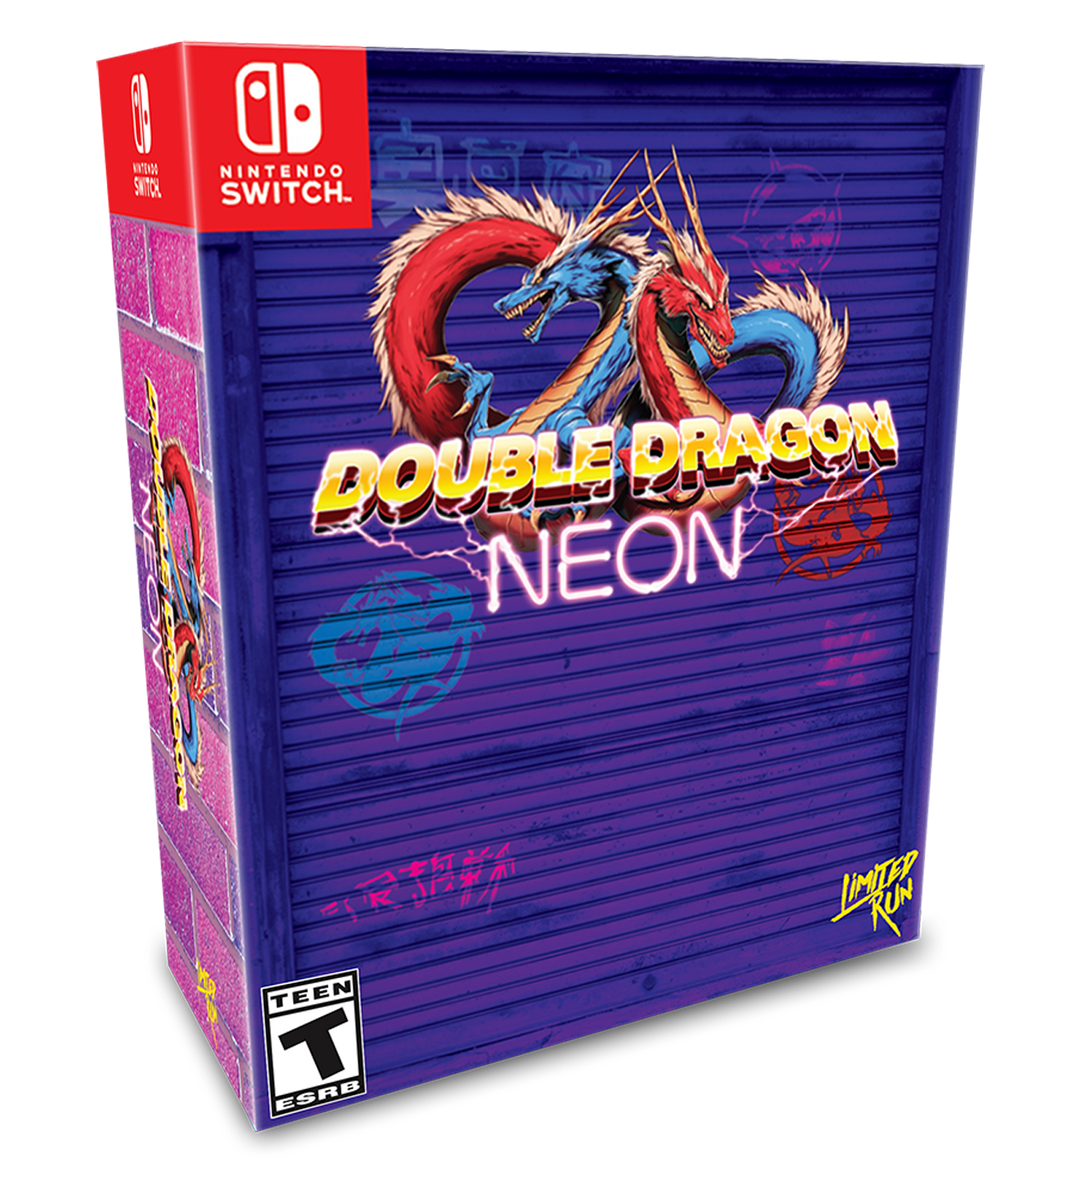 Double Dragon Neon Review (Switch eShop)